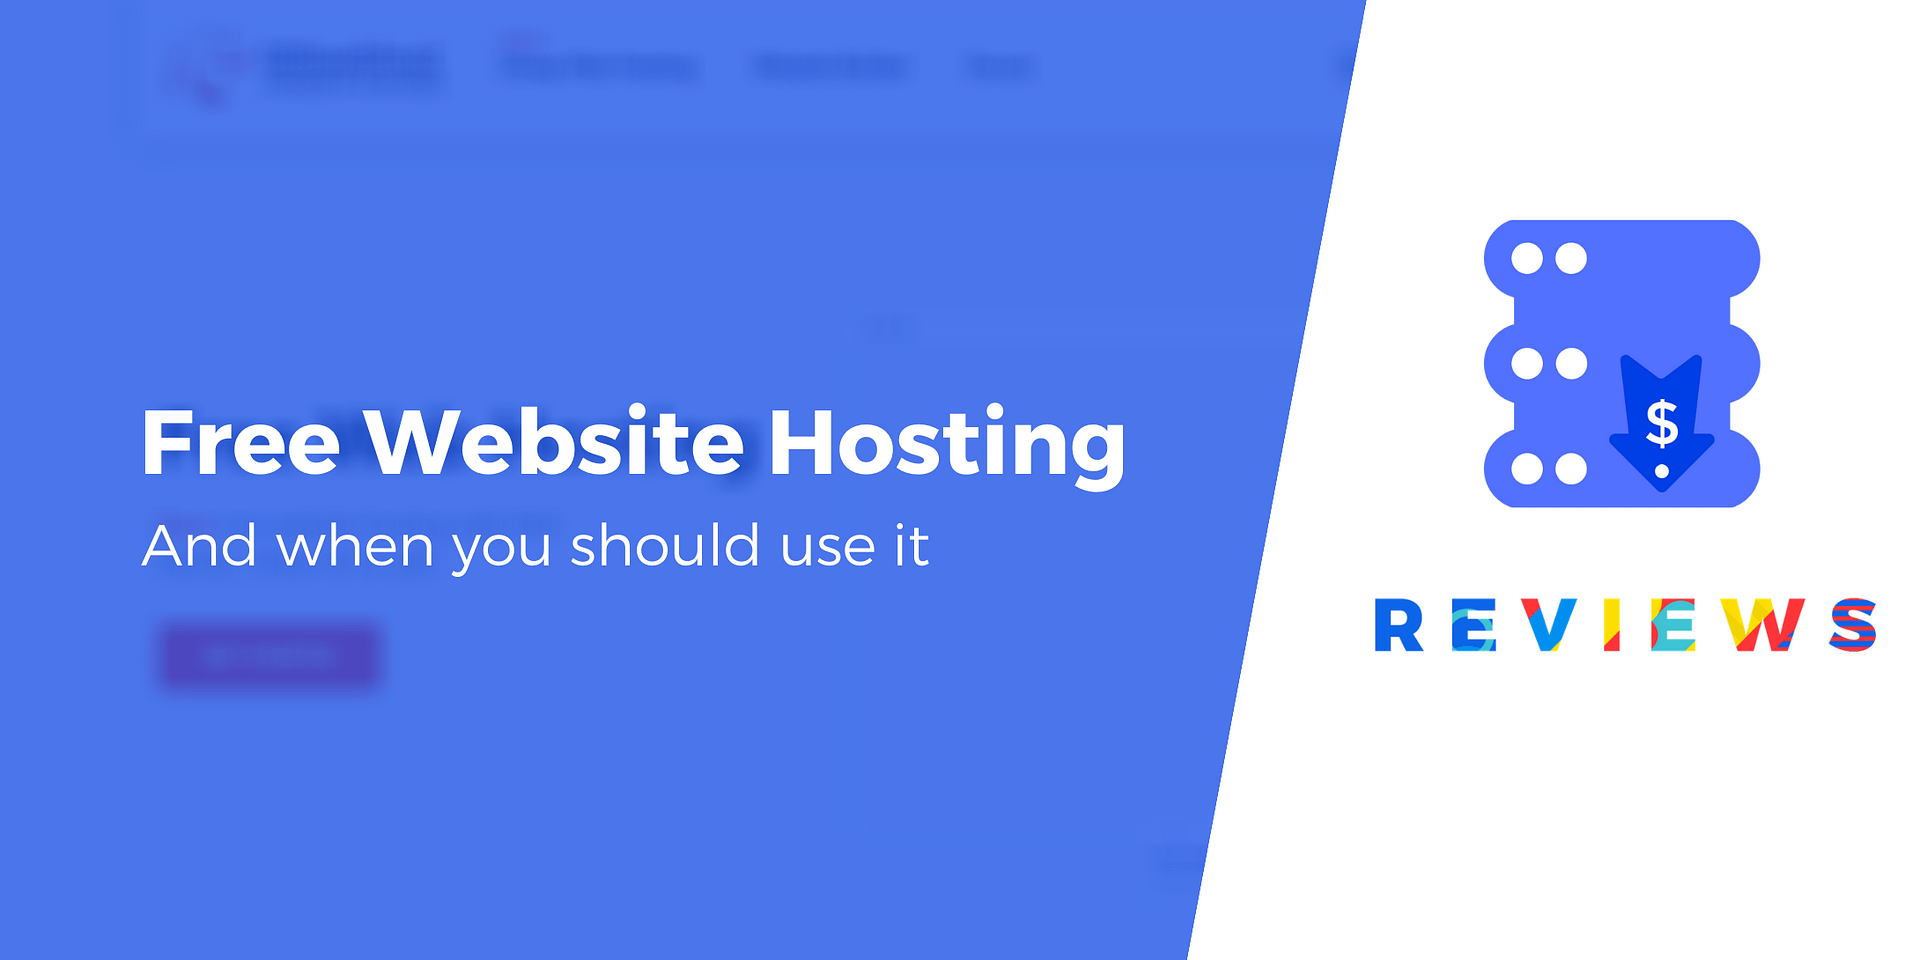 get free domain hosting